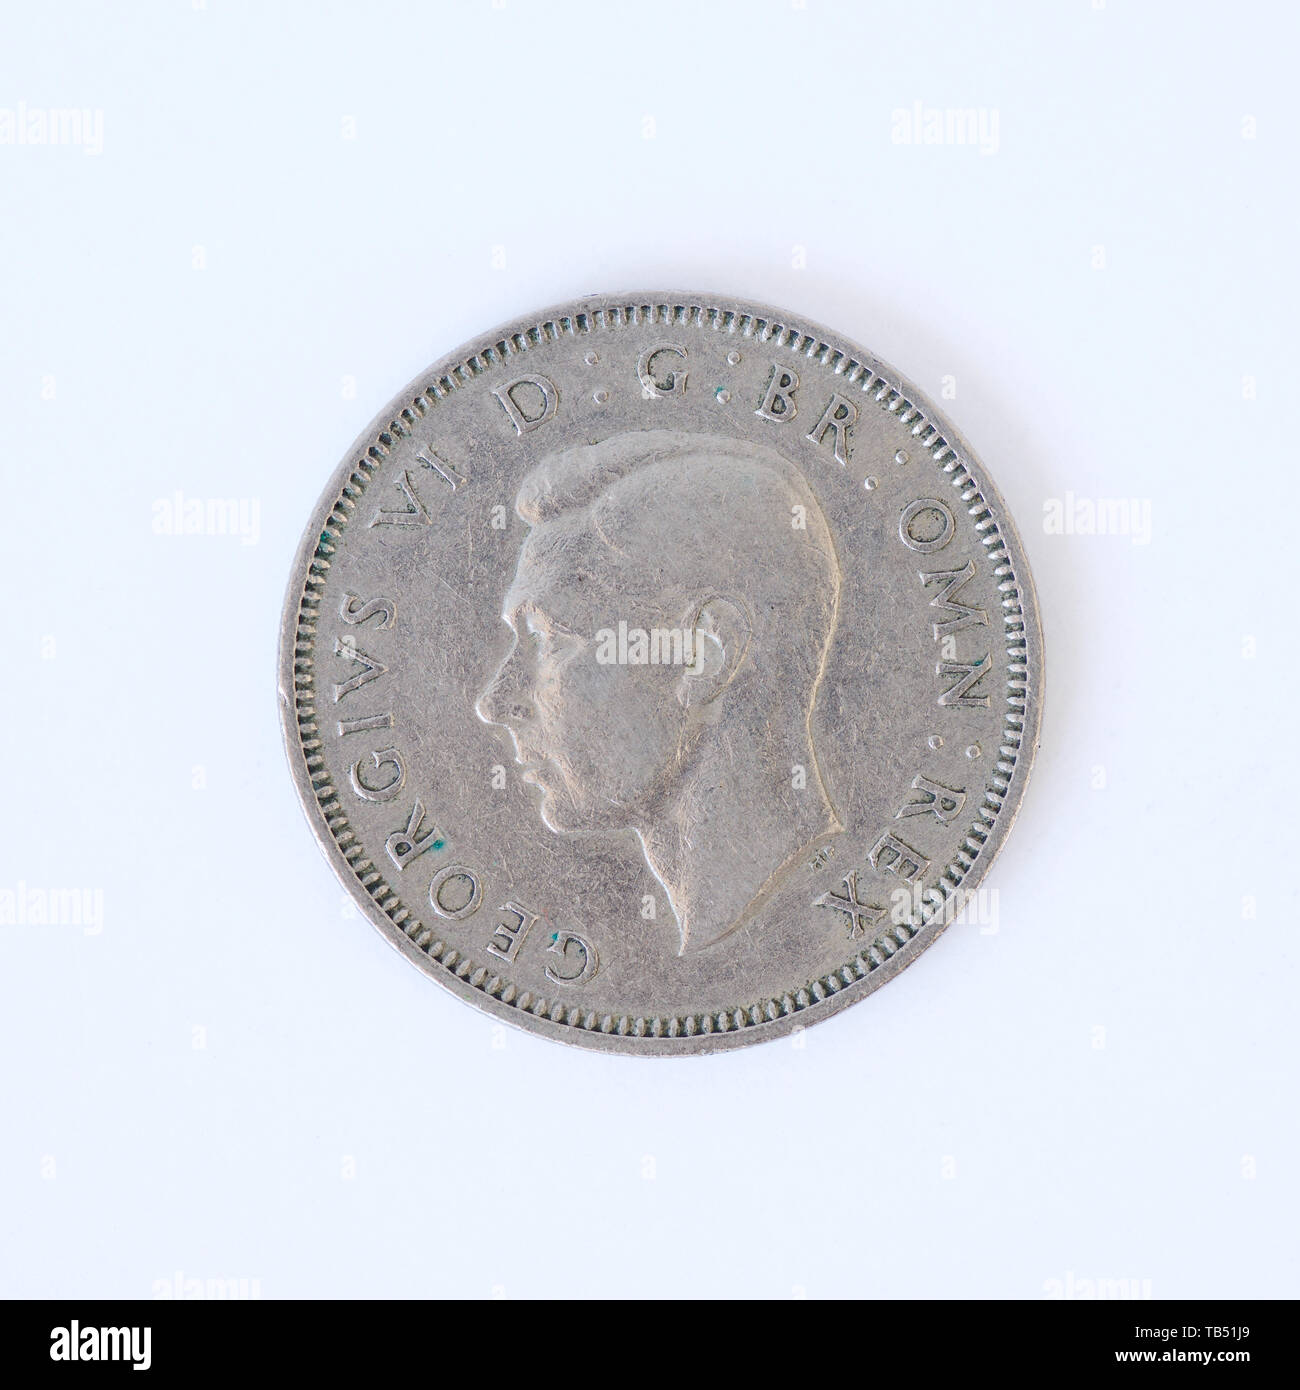 Great Britain 1949-1 Shilling Copper-Nickel Coin King George VI English